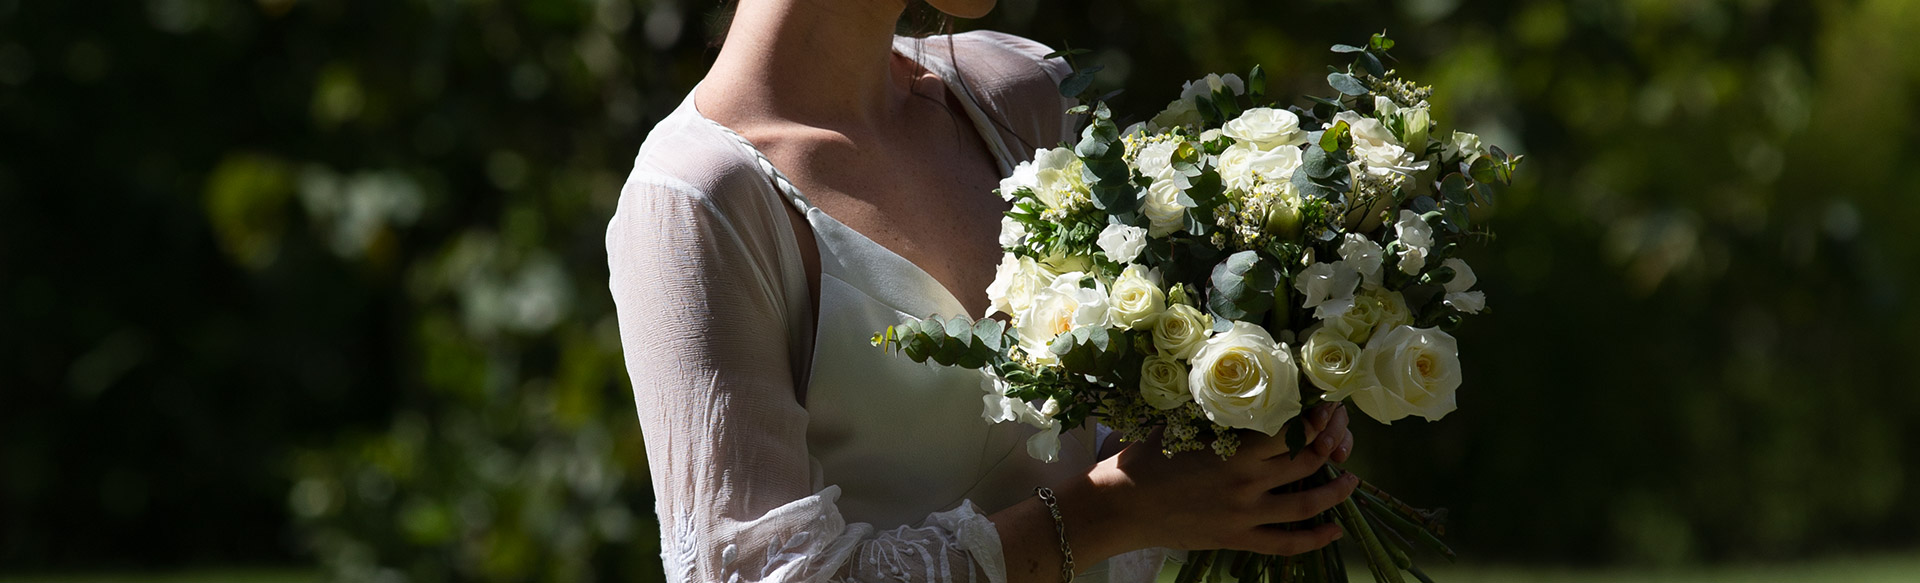 diy-wedding-flowers-white.jpg